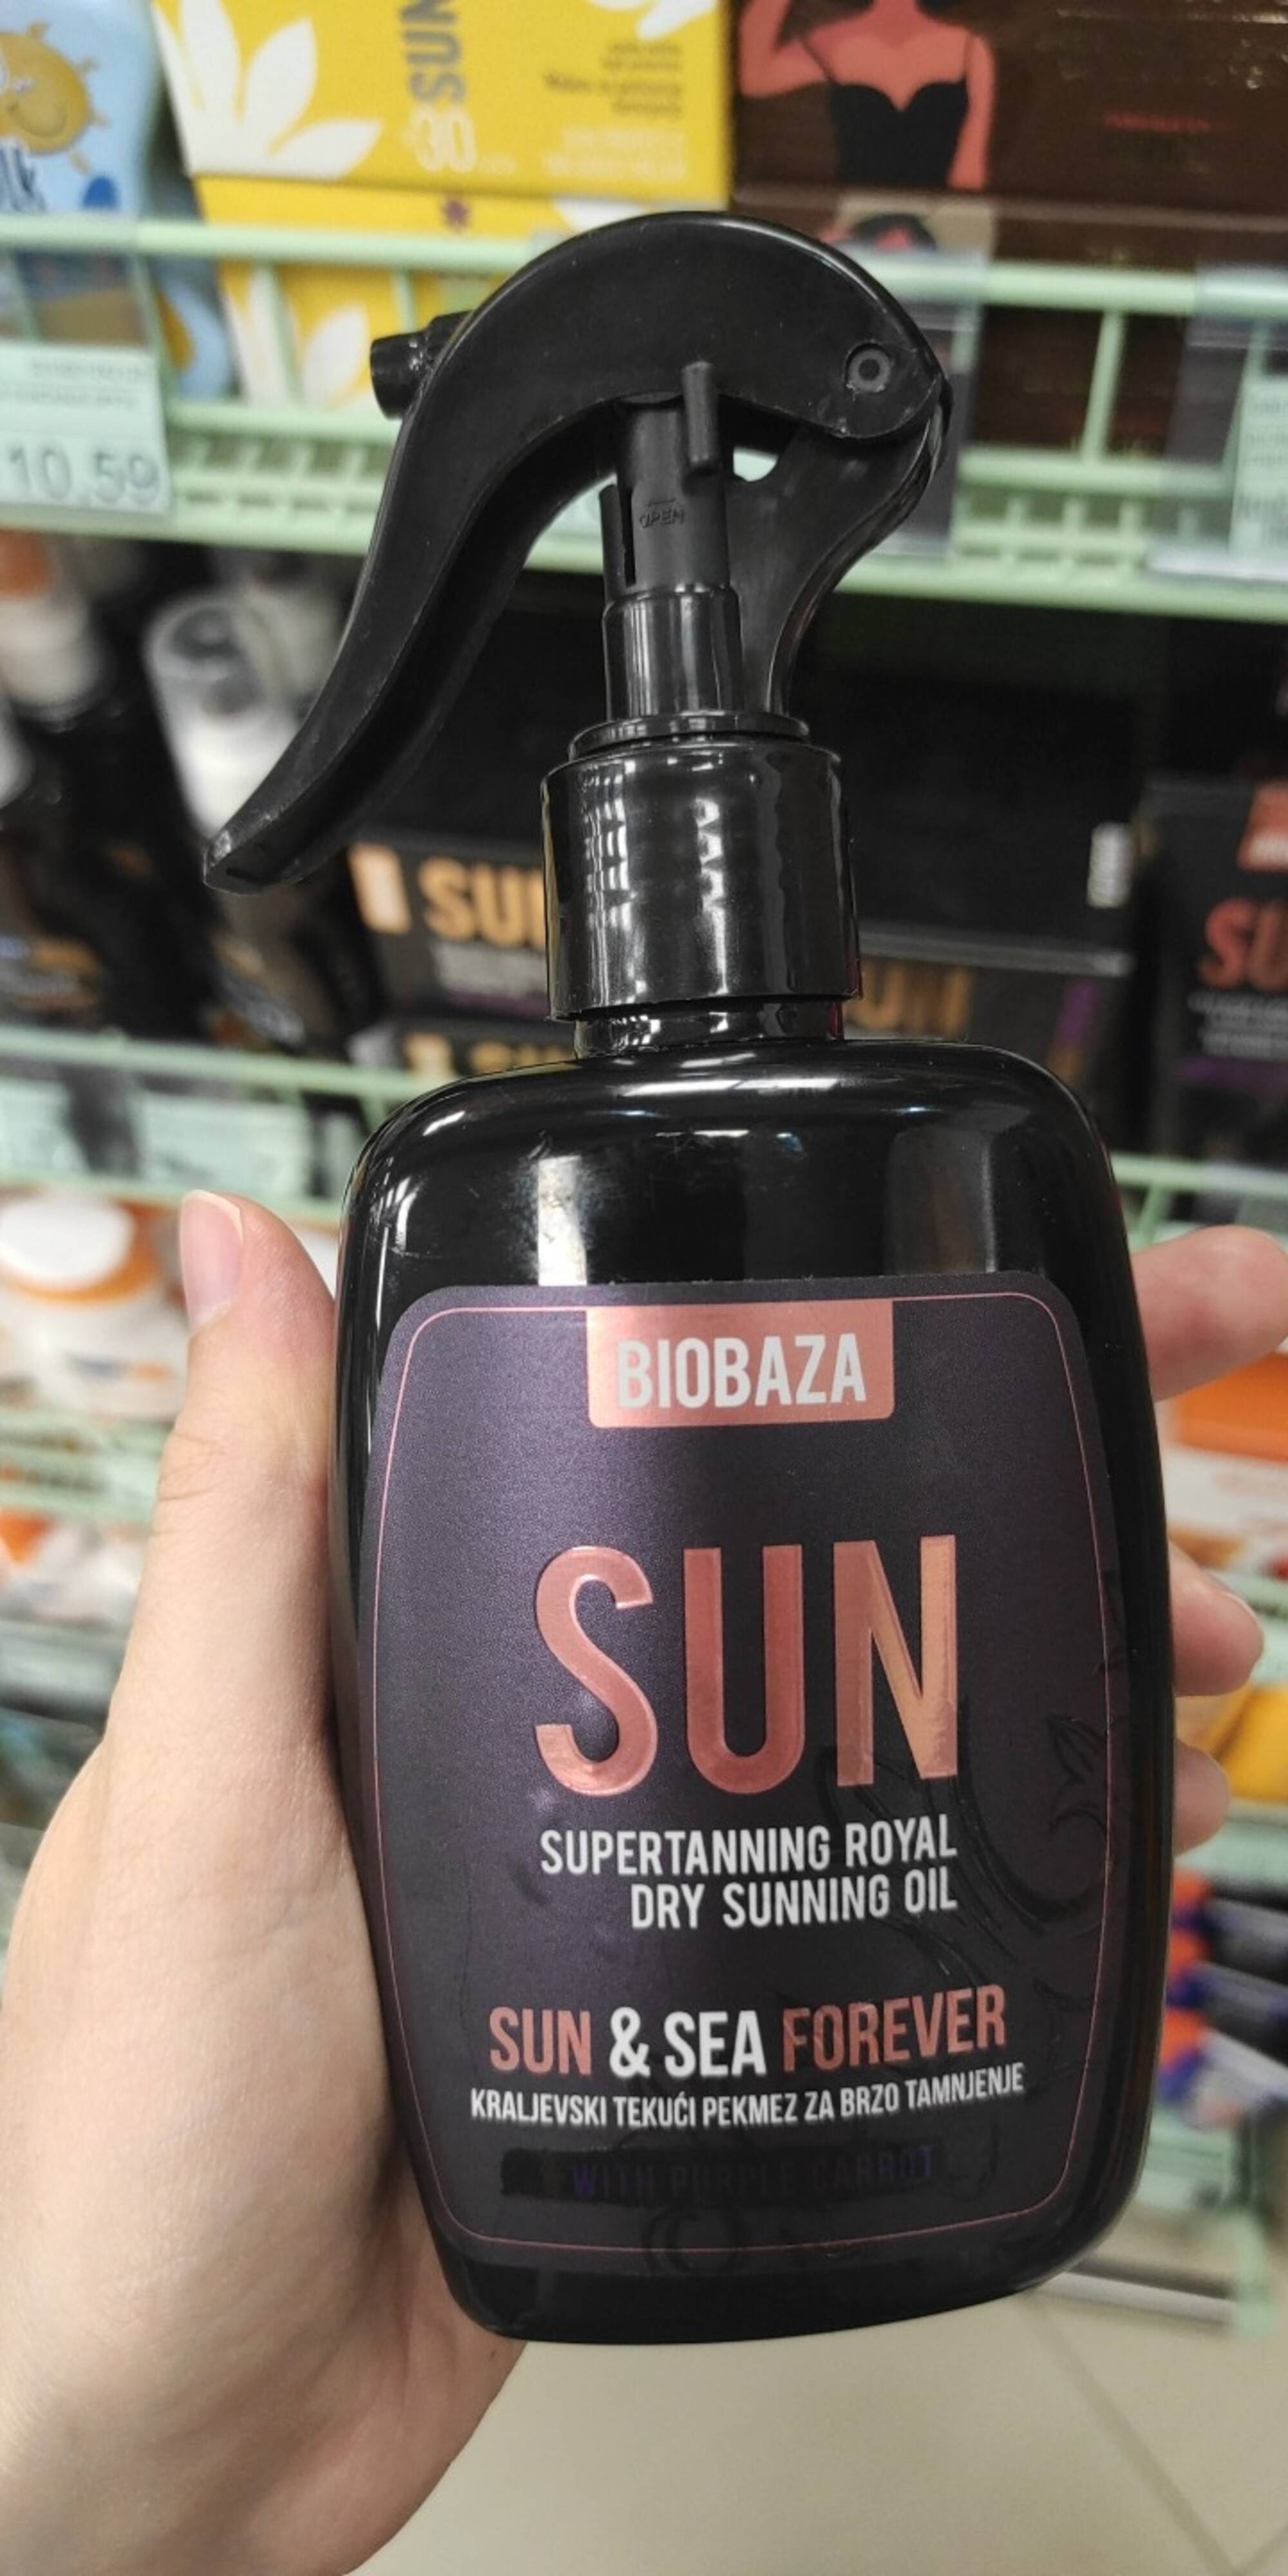 BIOBAZA - Sun & sea forever - Spertanning royal dry sunning oil